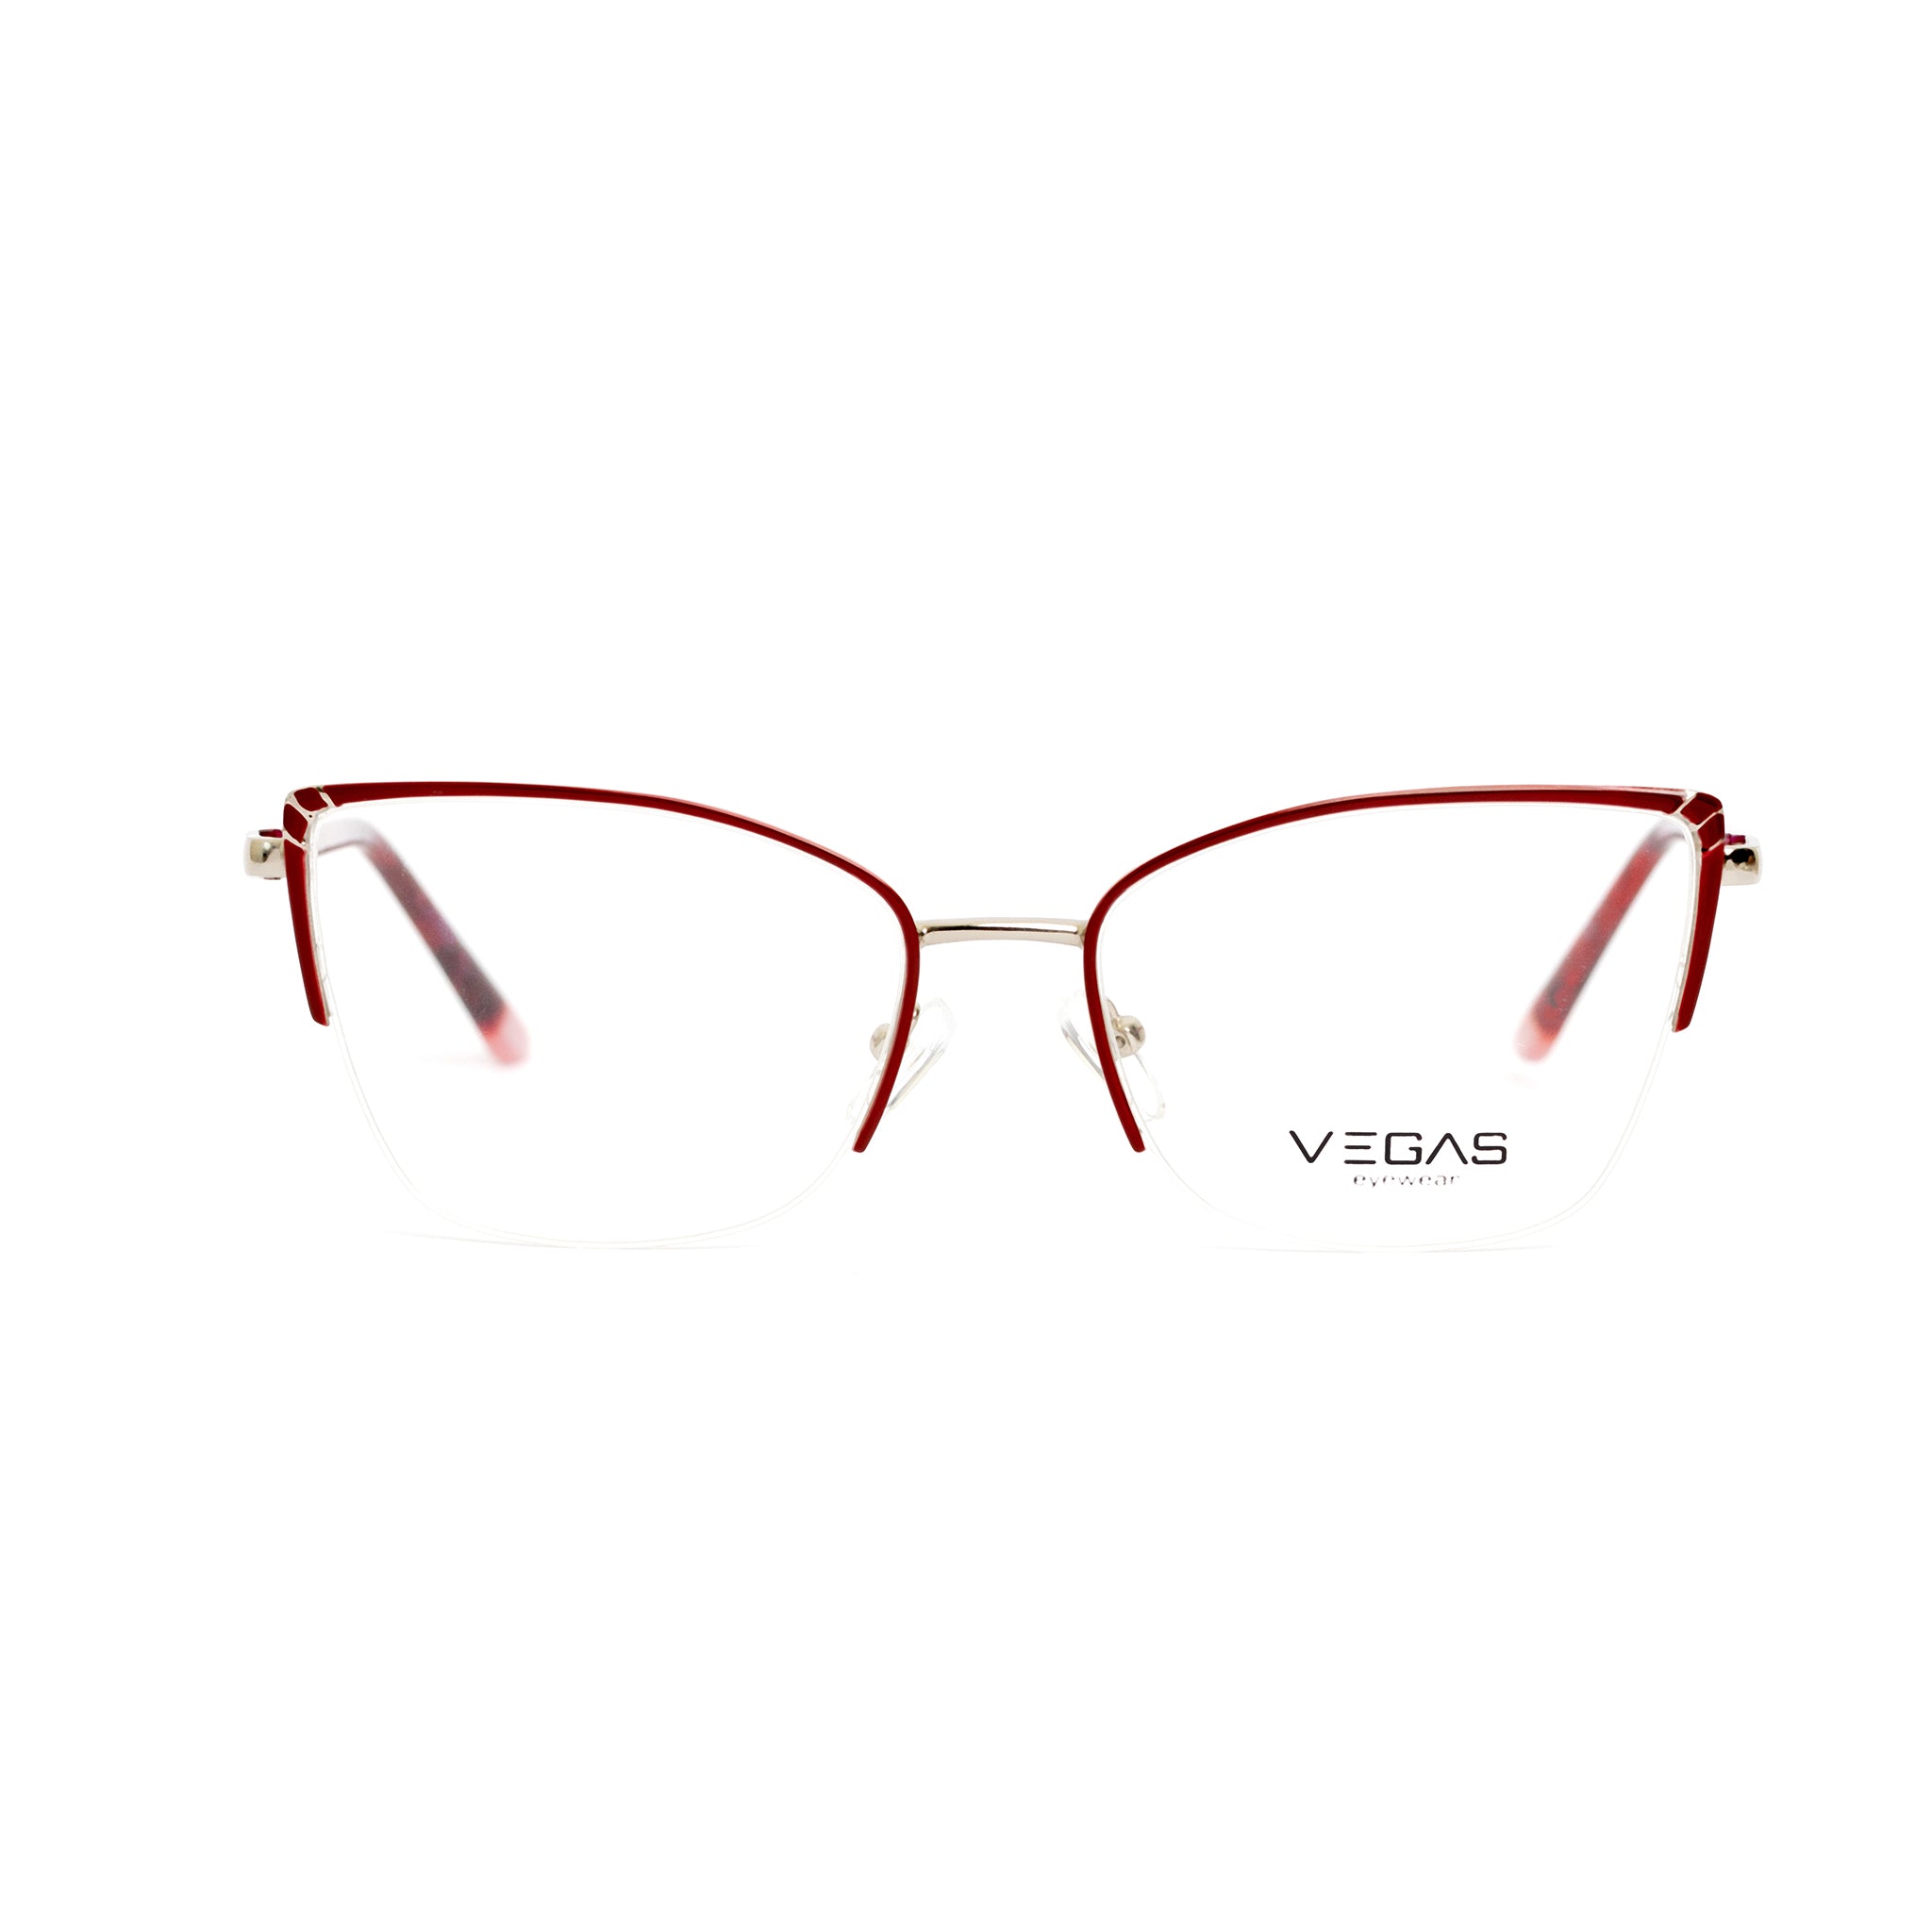 VEGAS LE6189Z - COC Eyewear